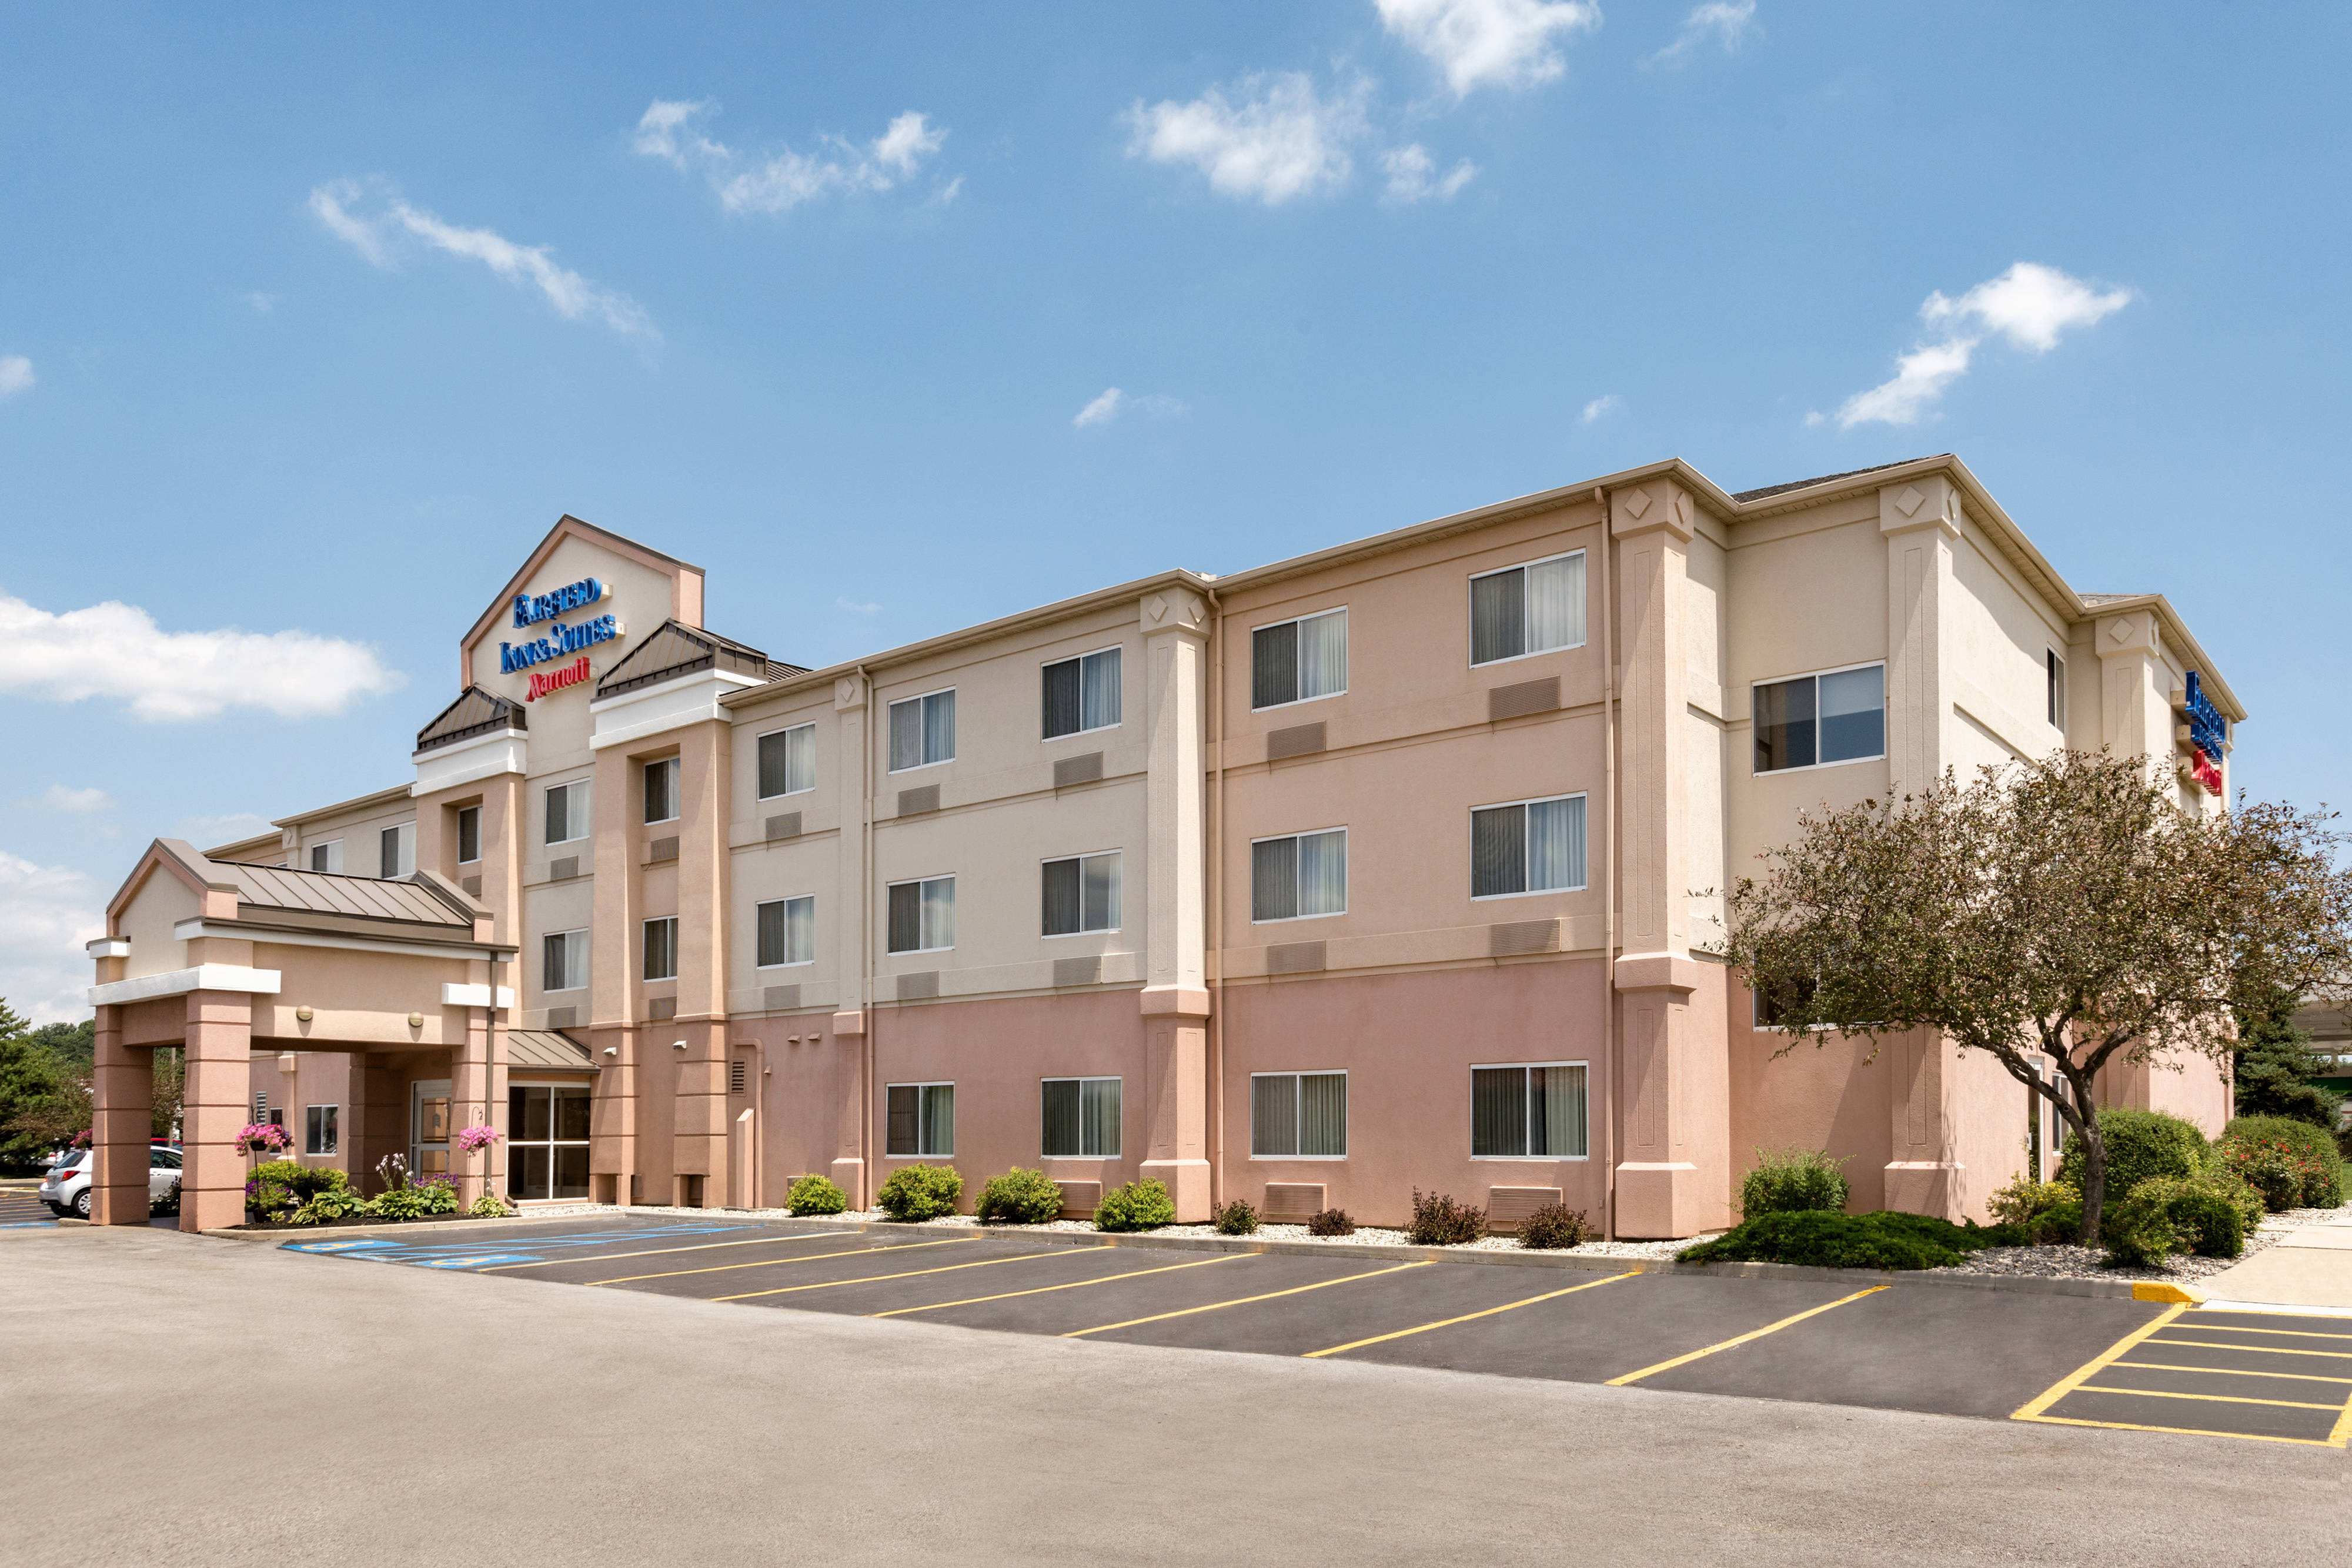 Photo of Fairfield Inn & Suites by Marriott Toledo Maumee, Maumee, OH